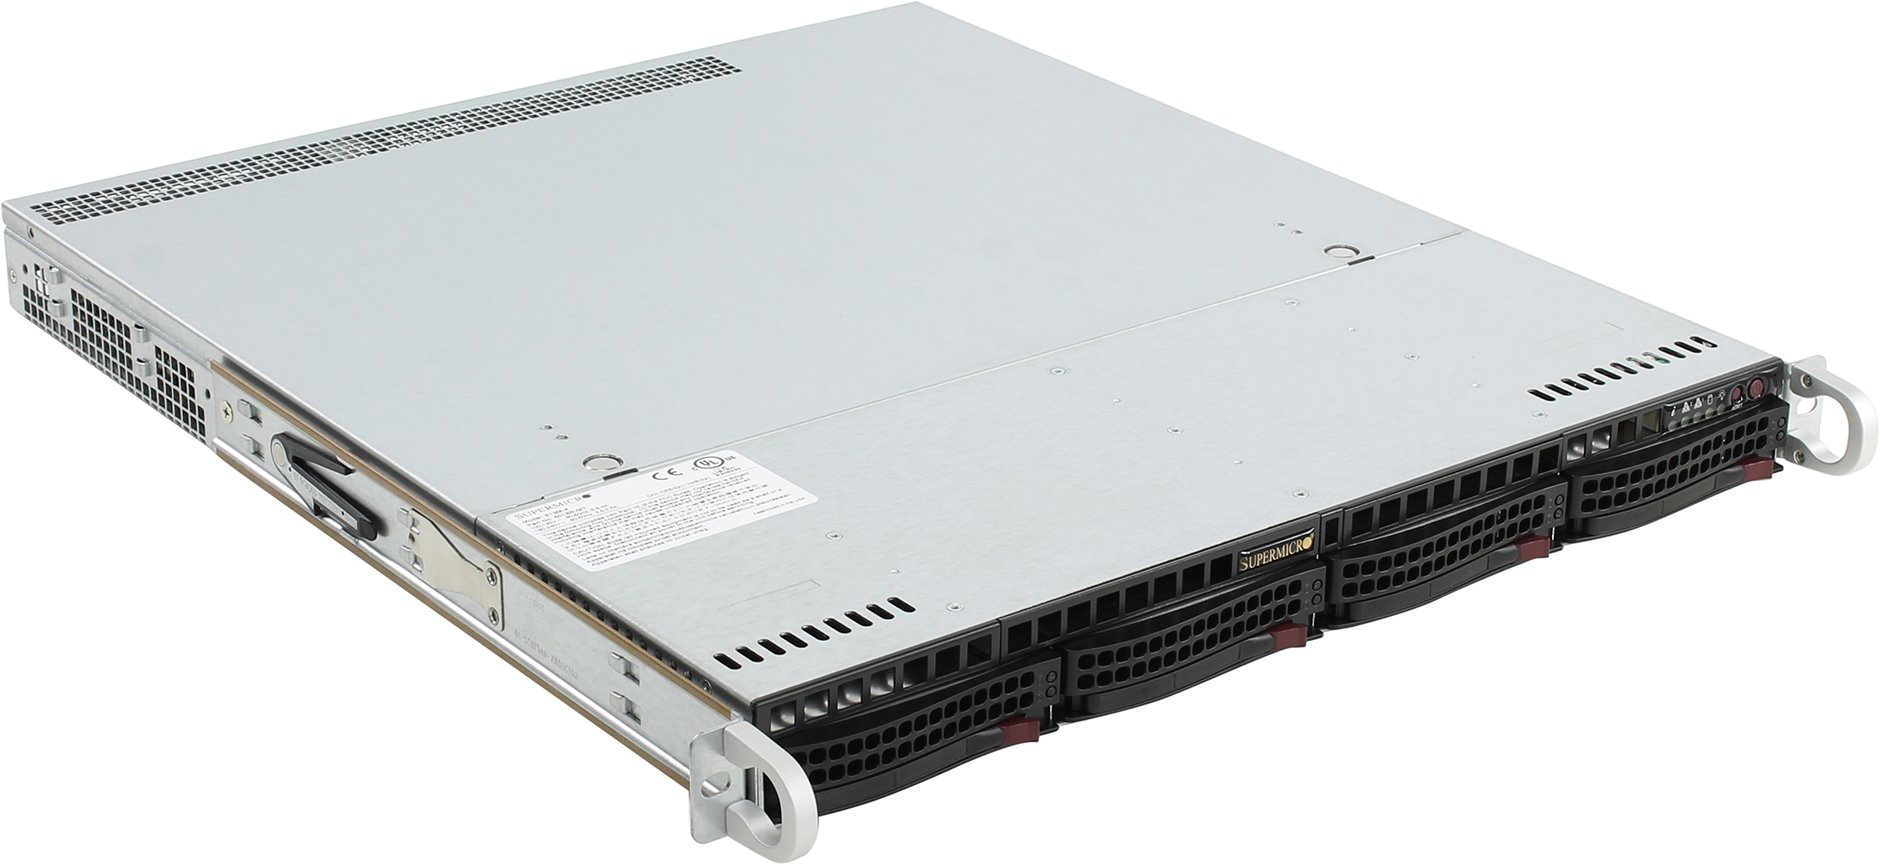 Серверная платформа SuperMicro SYS-1028R-WMR, 1U, 2 x LGA2011-3, Intel C612, 16 x DDR4, 2 x 2.5" SATA, 2xGigabit Ethernet (1000 Мбит/с), 400 Вт